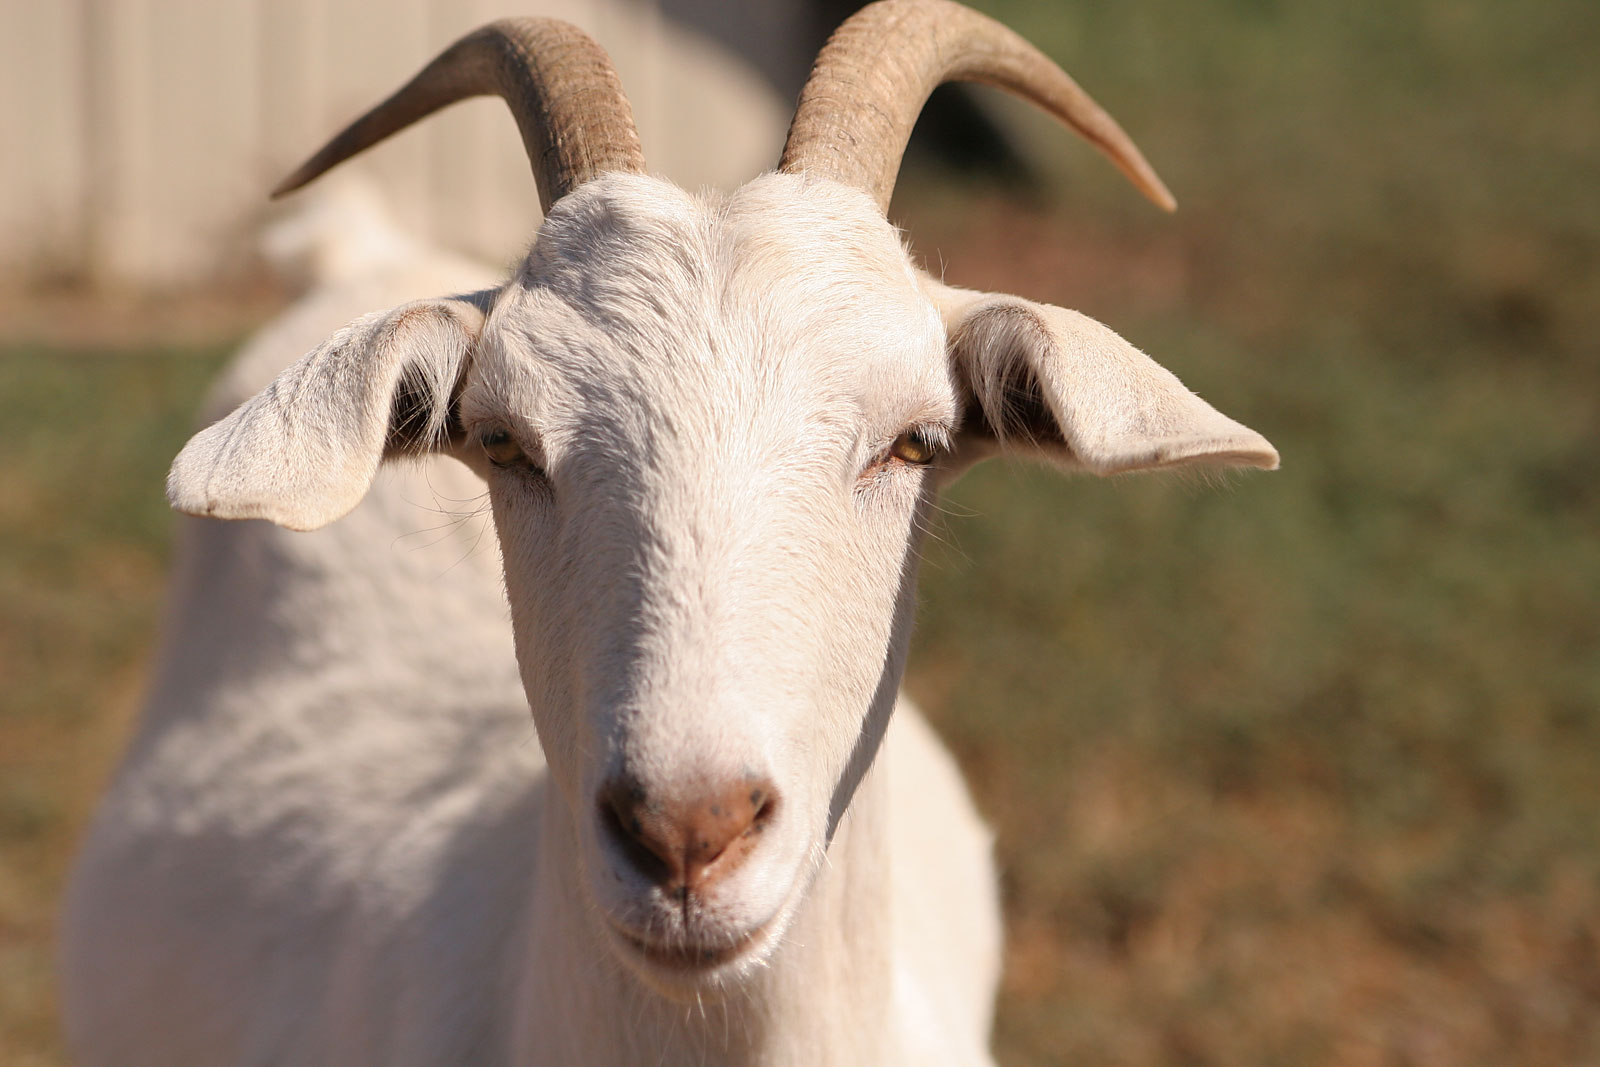 Improper goat euthanasia lands antibody supplier with USDA complaint